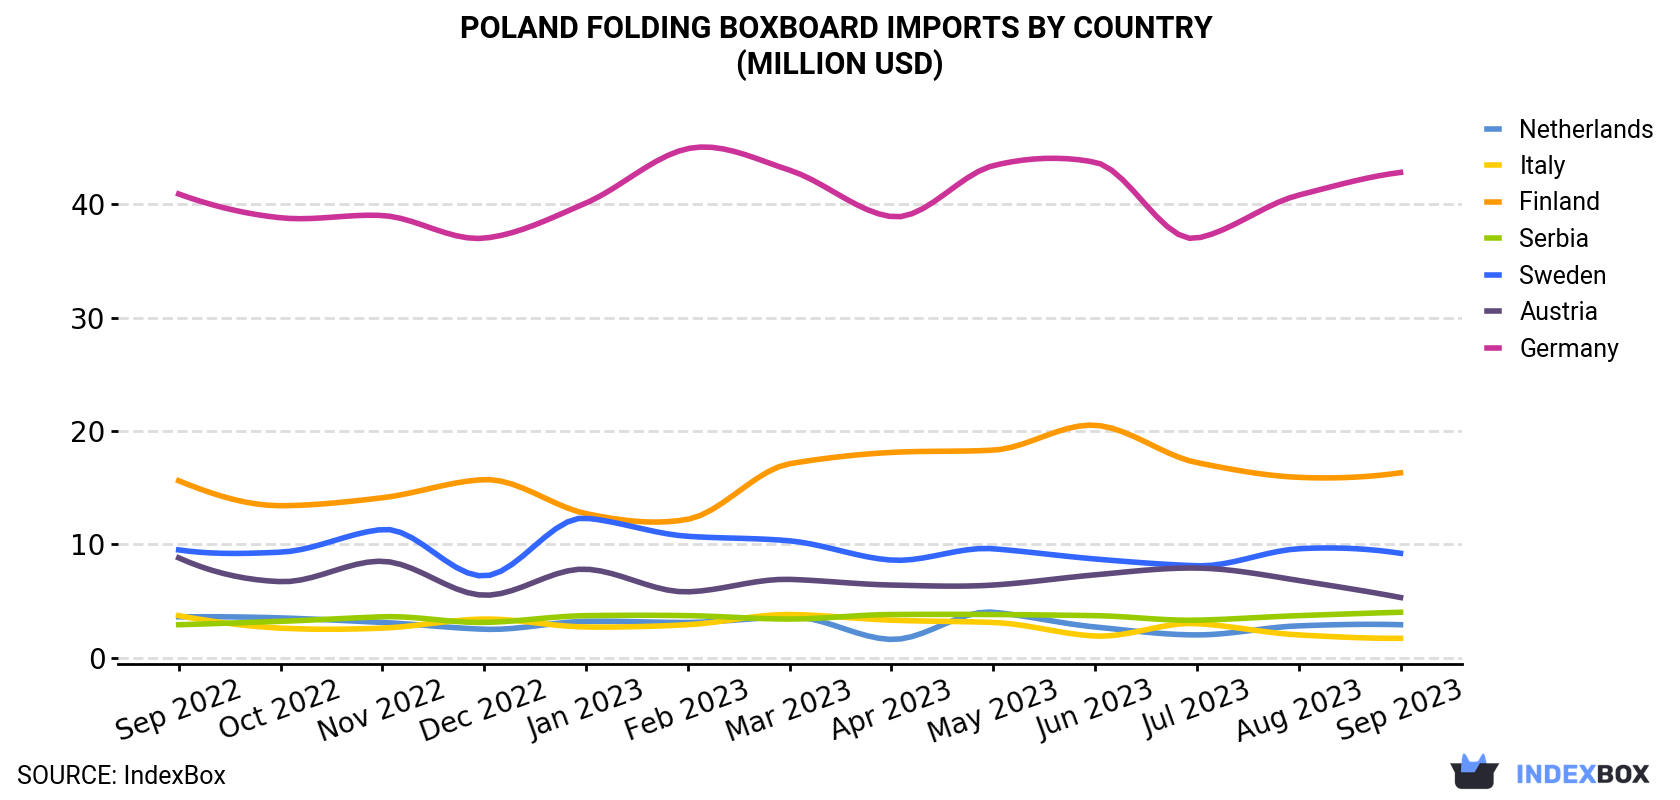 Poland Folding Boxboard Imports By Country (Million USD)